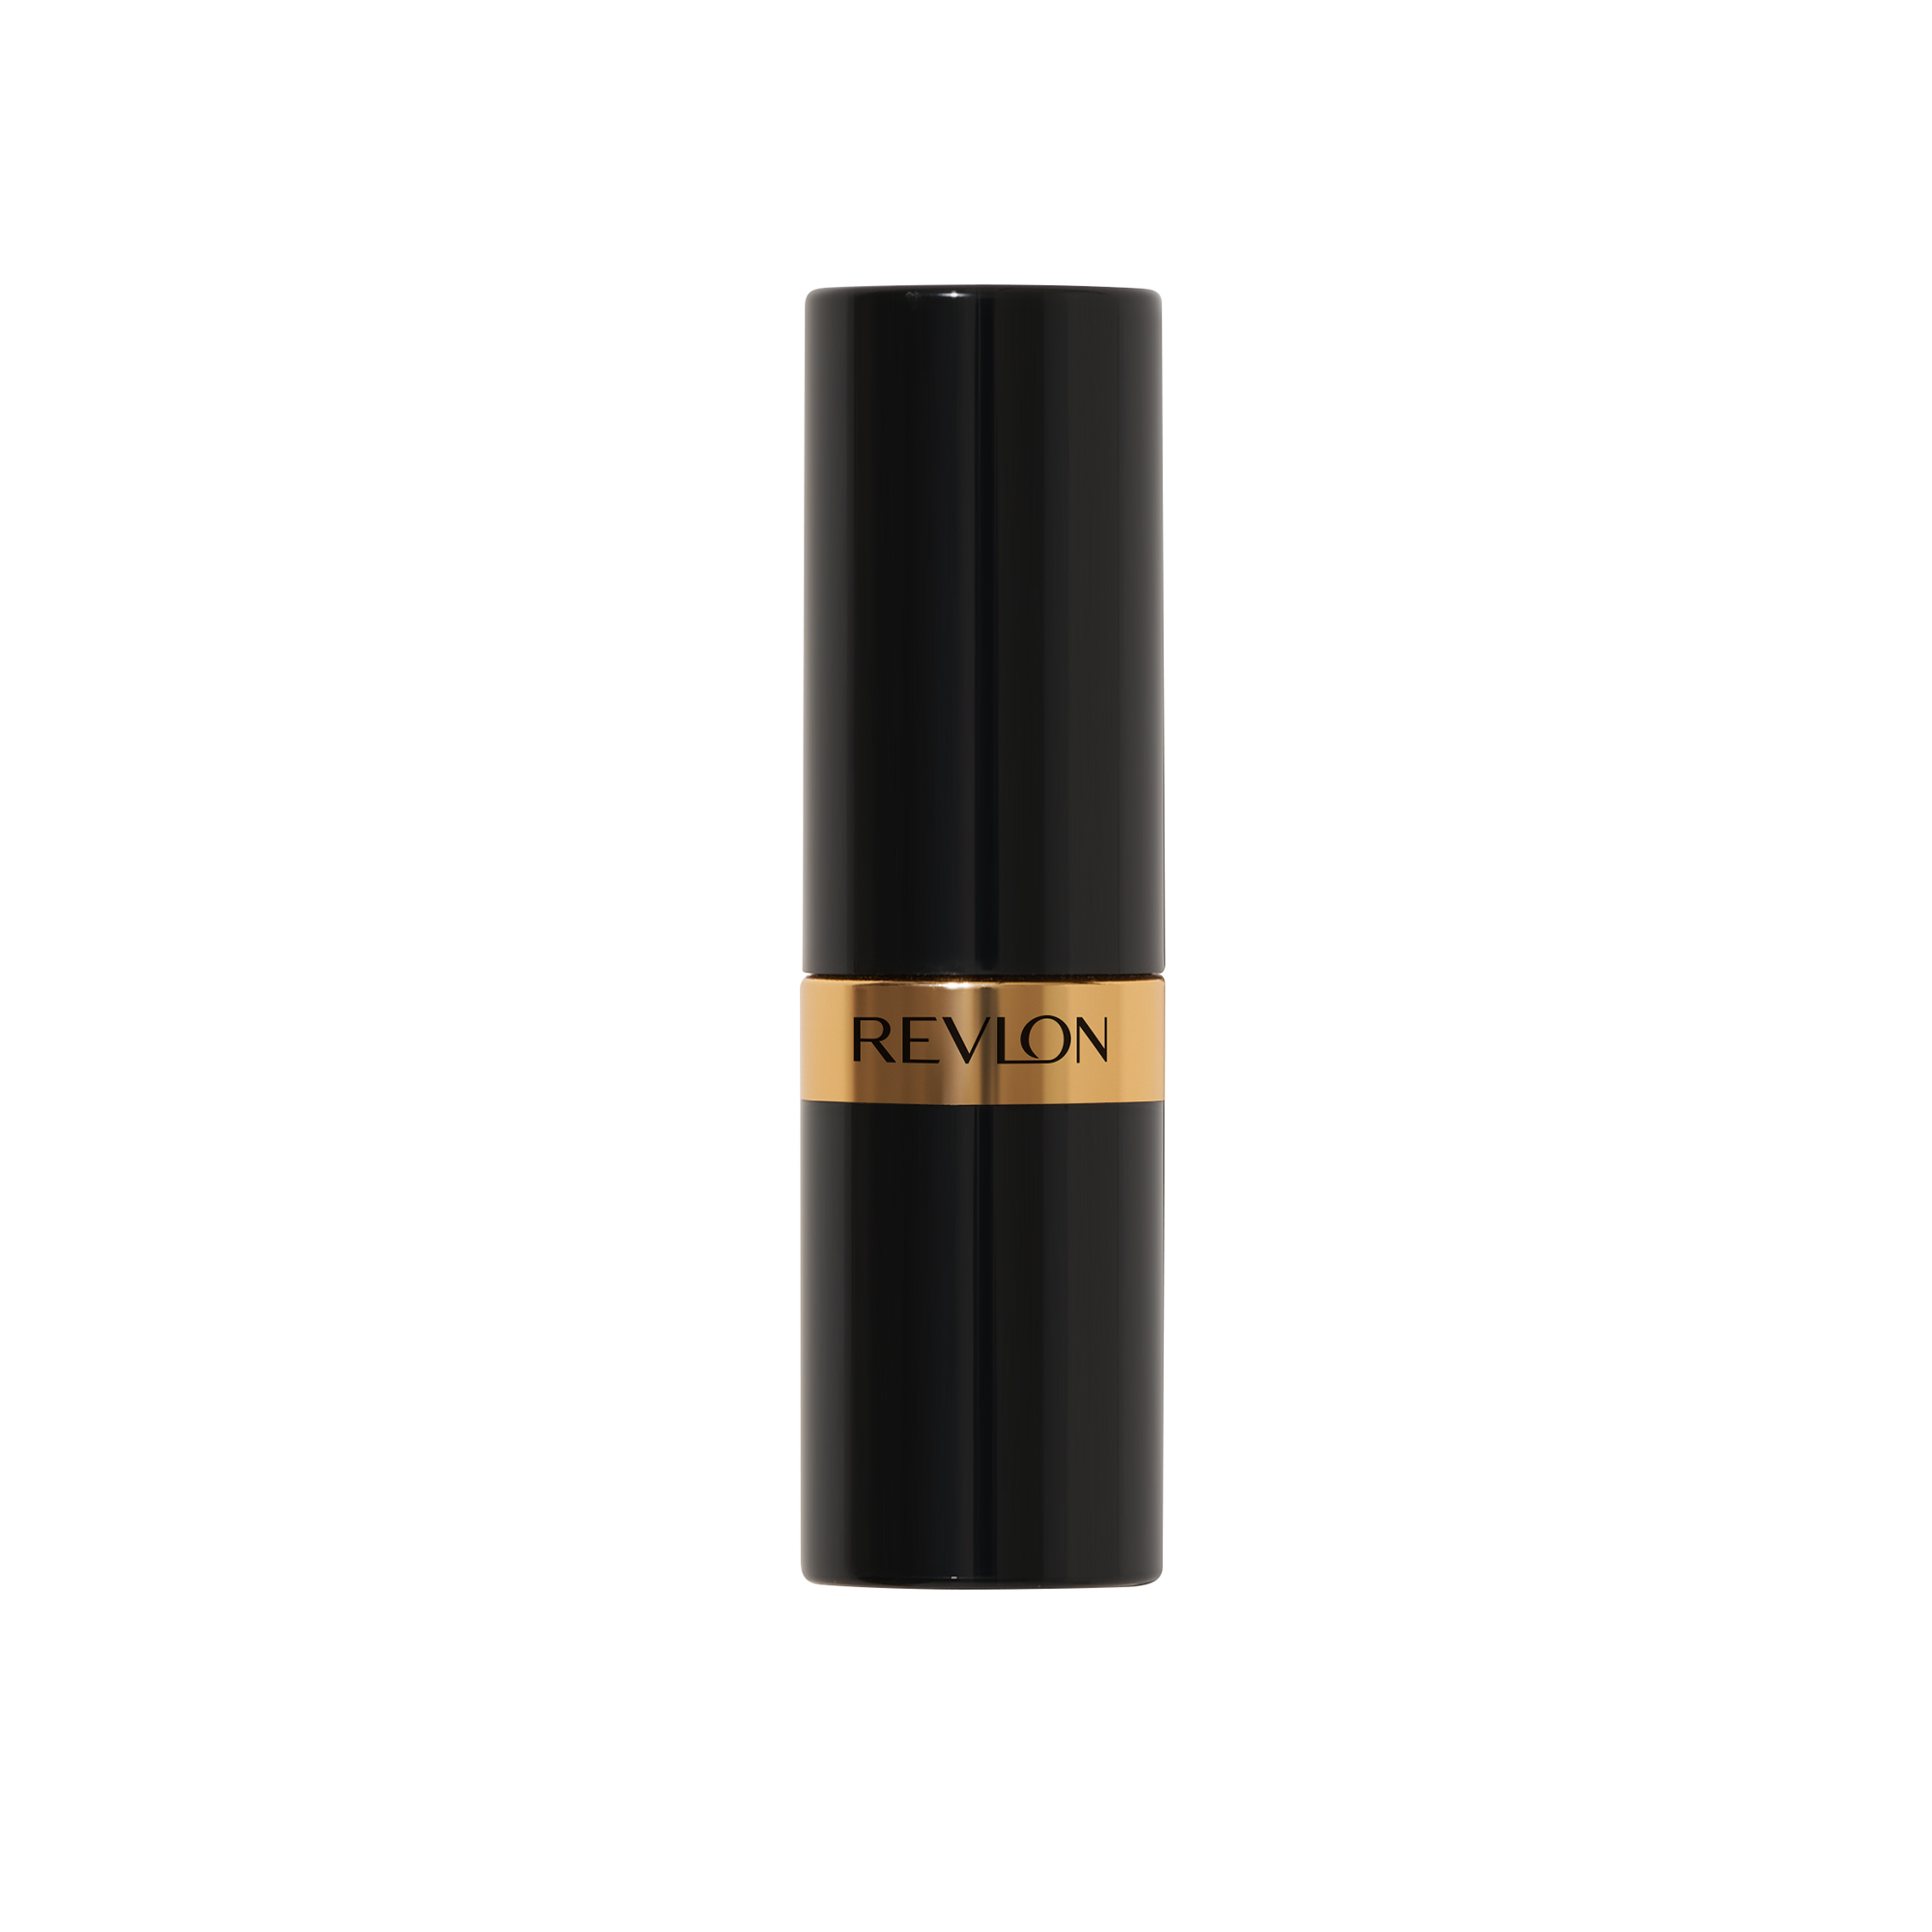 Revlon Super Lustrous Lipstick, Fuchsia Shock - image 3 of 7